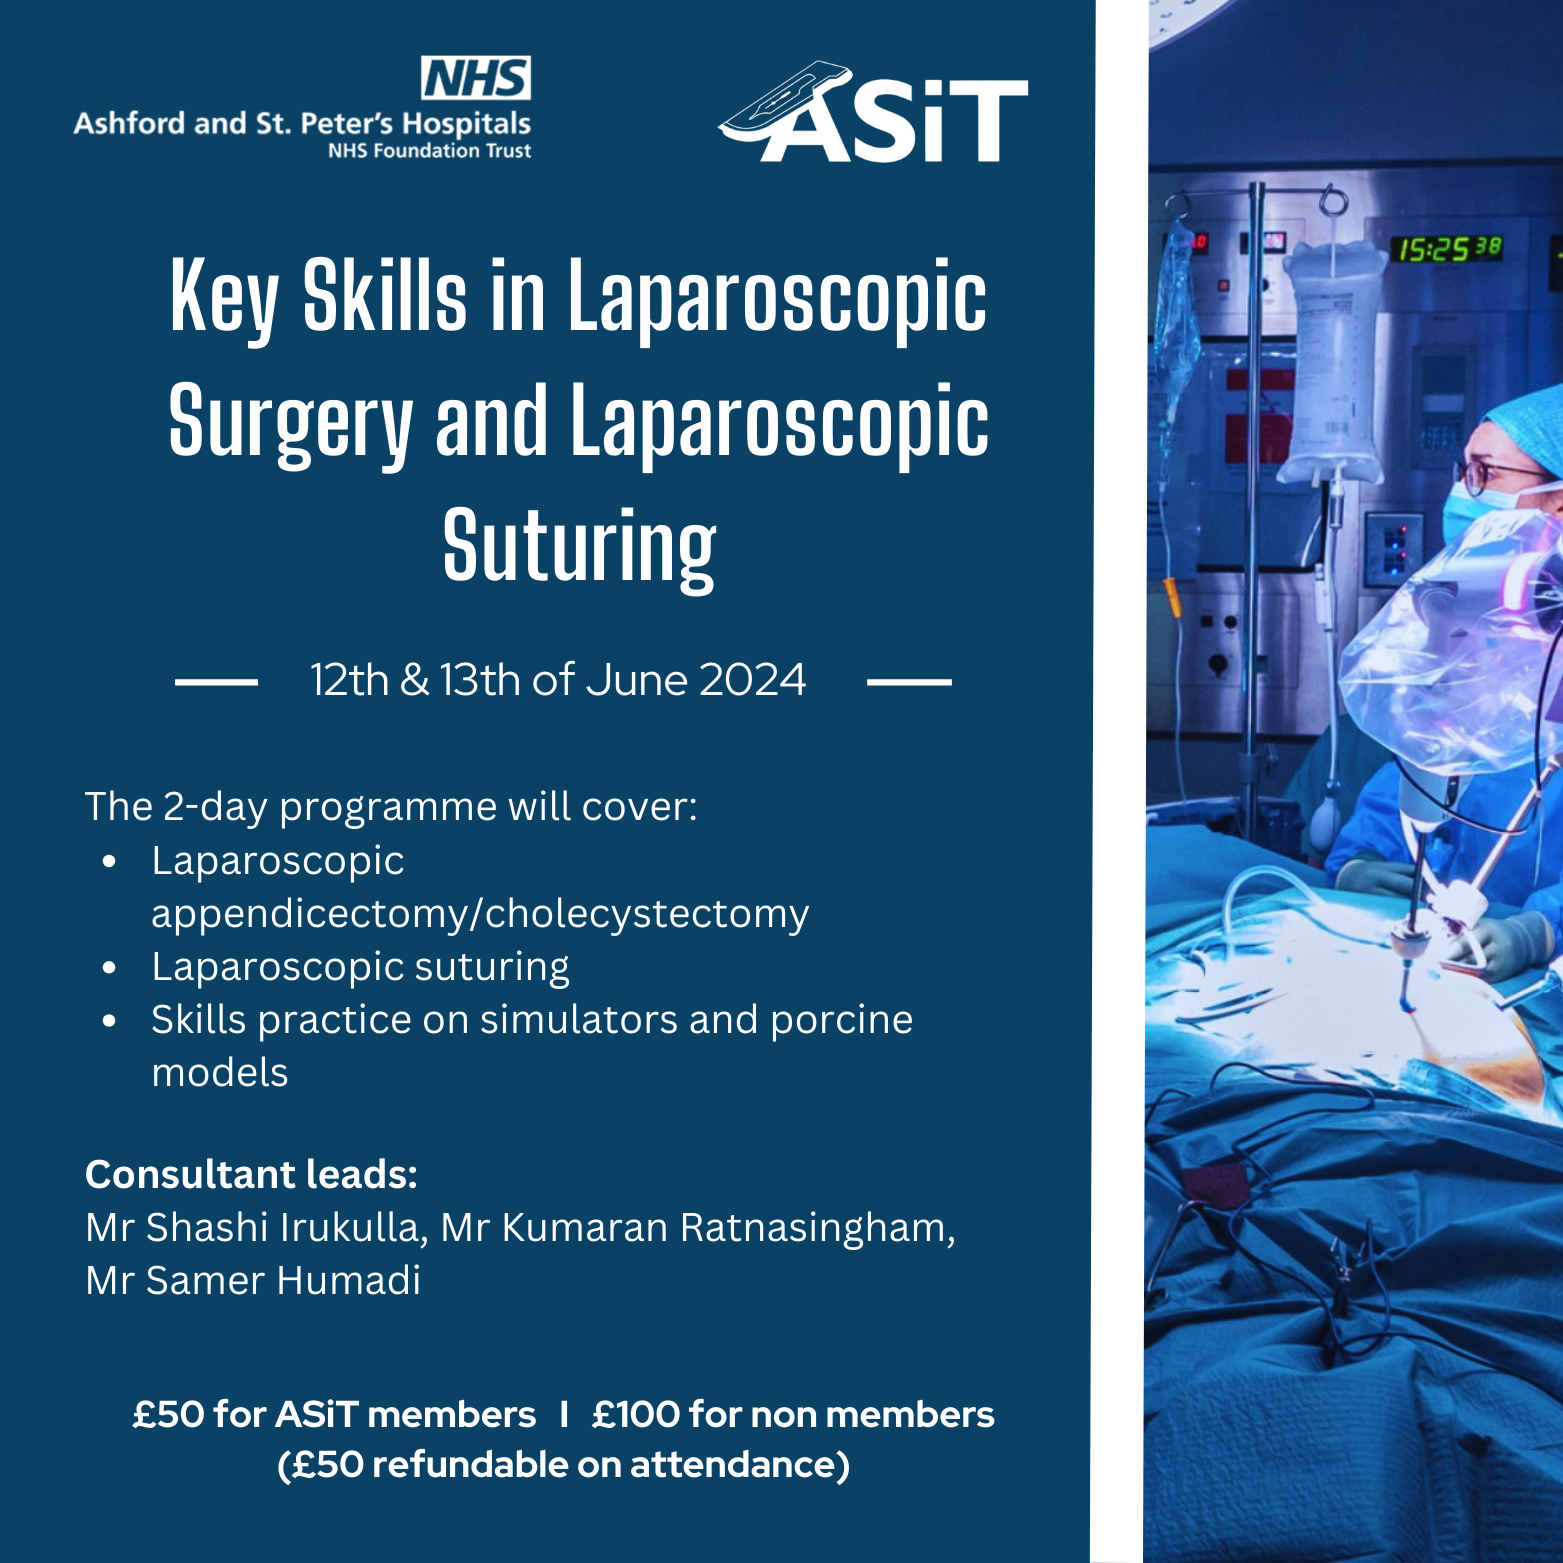 Key Skills in Laparoscopic Surgery and Laparoscopic Suturing